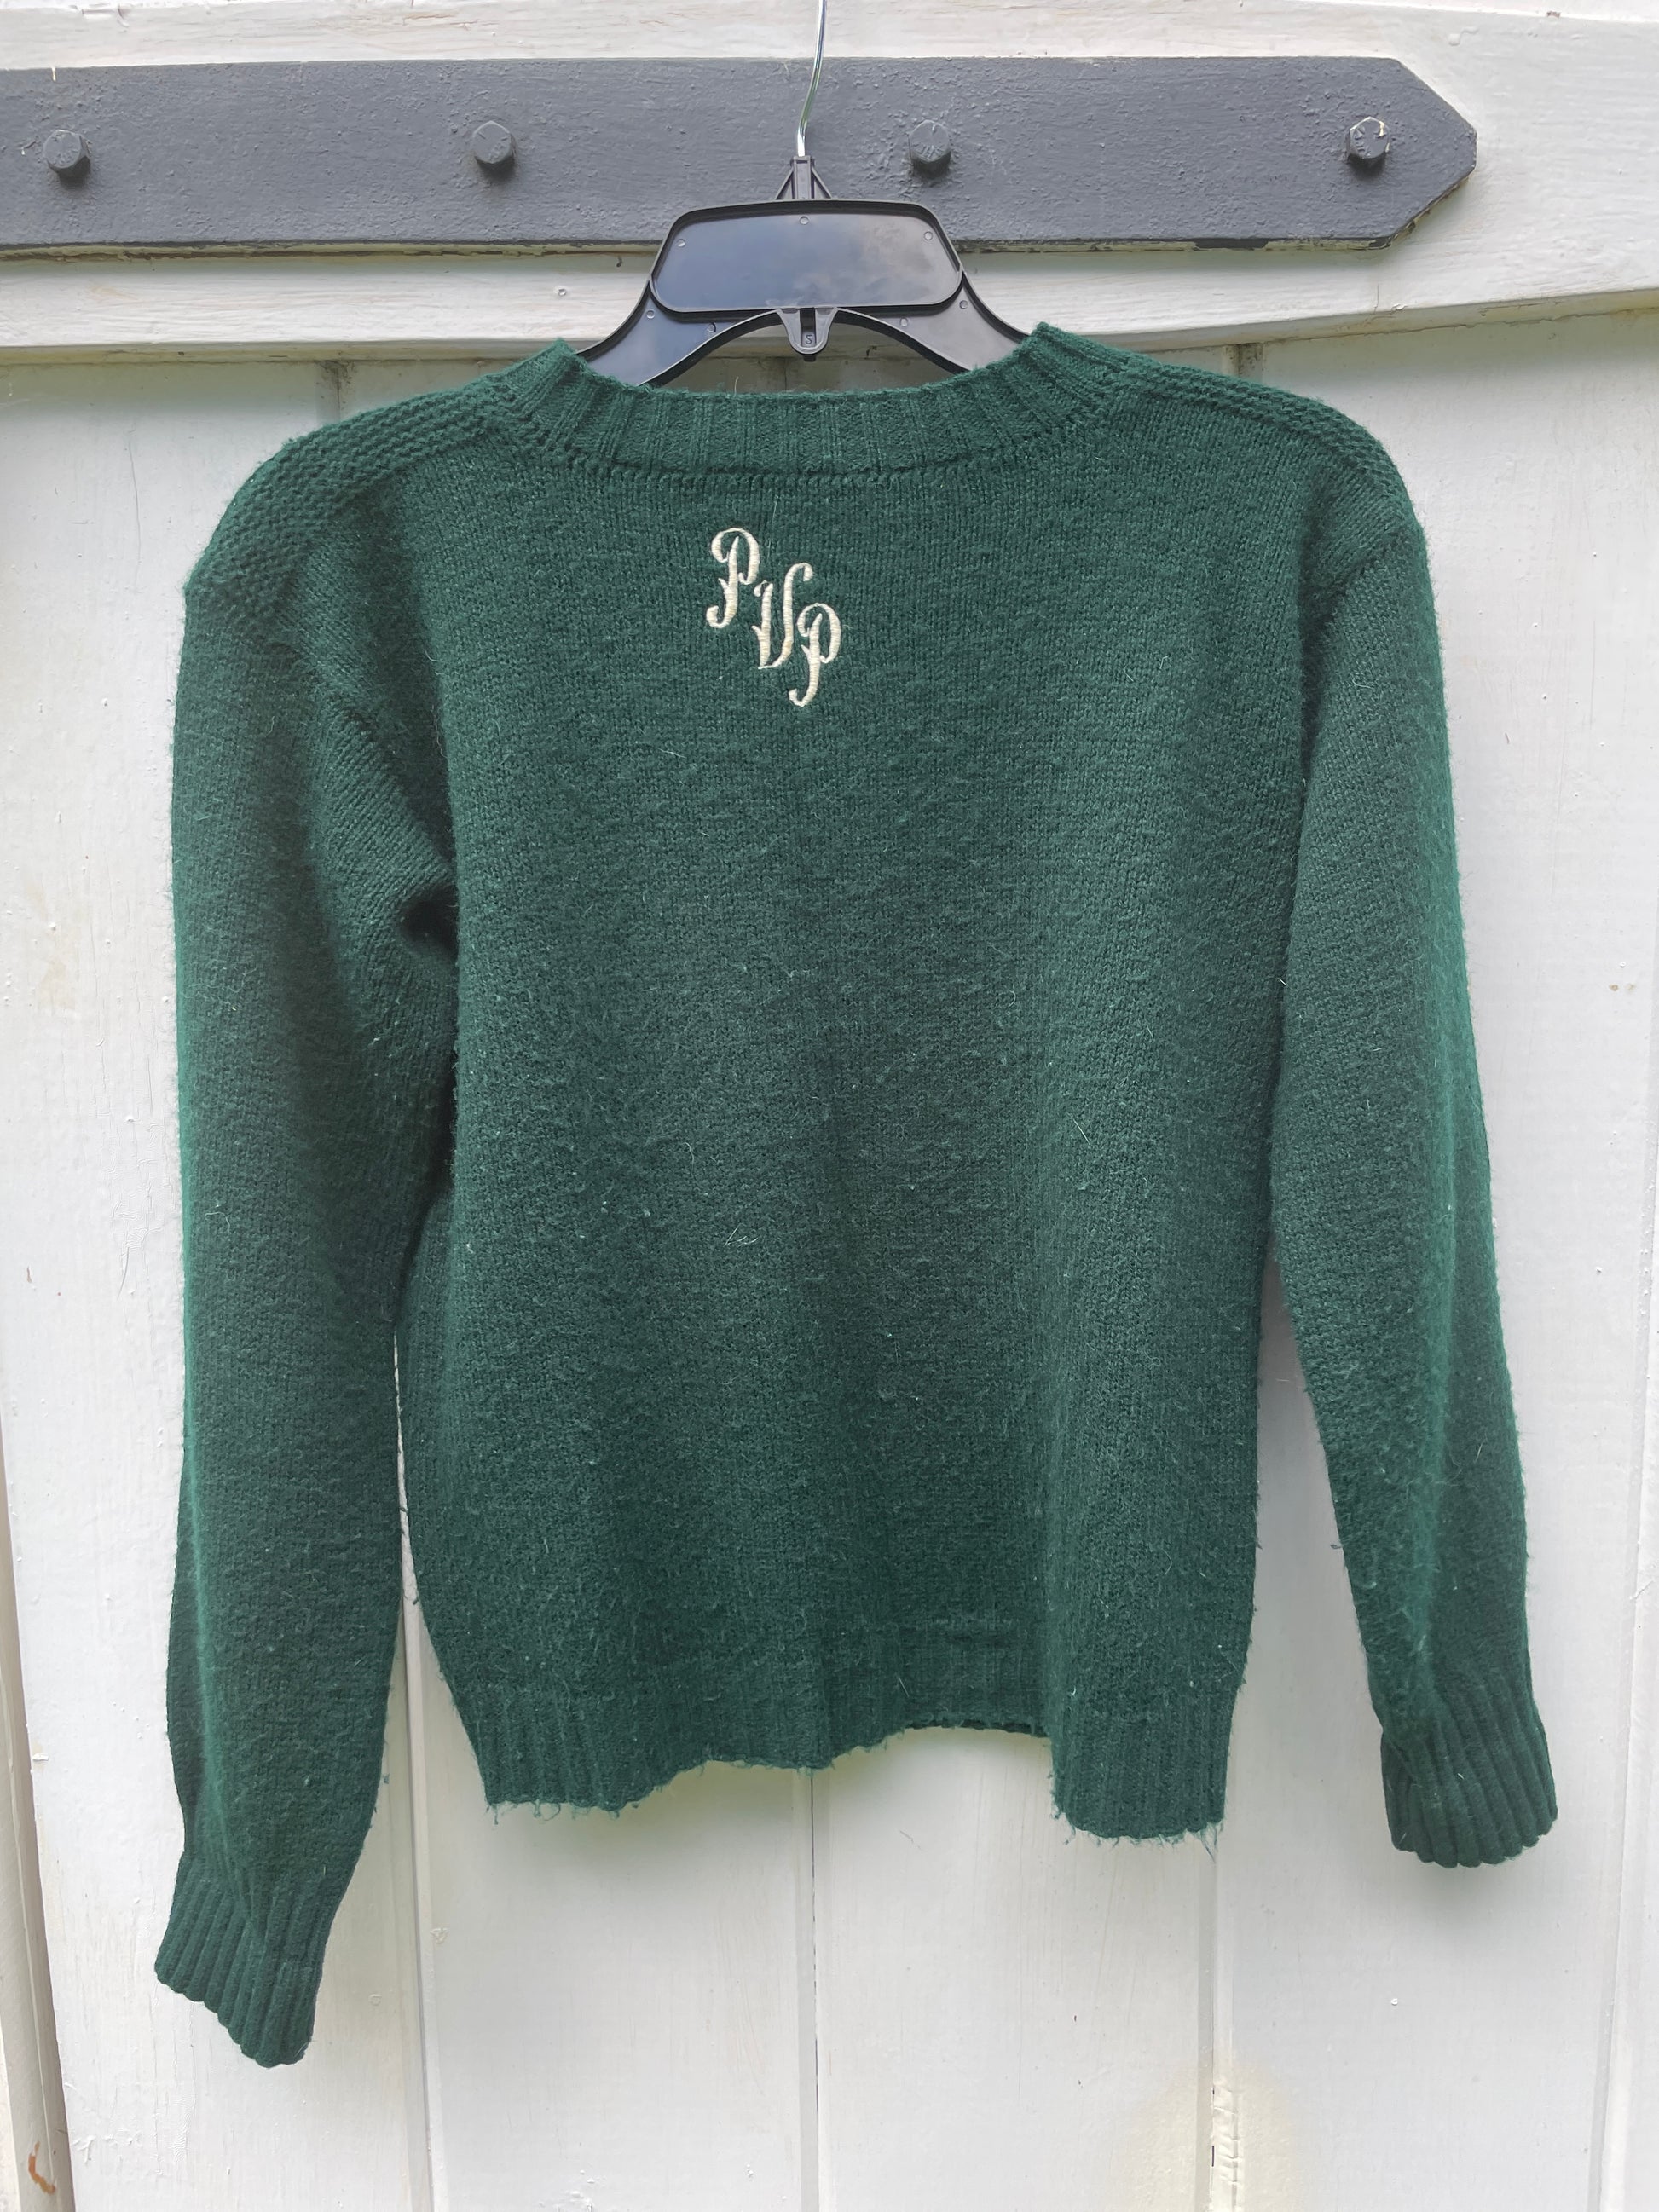 1960s green sweater 60s Green Monogram Pullover Crewneck Vintage Sweater